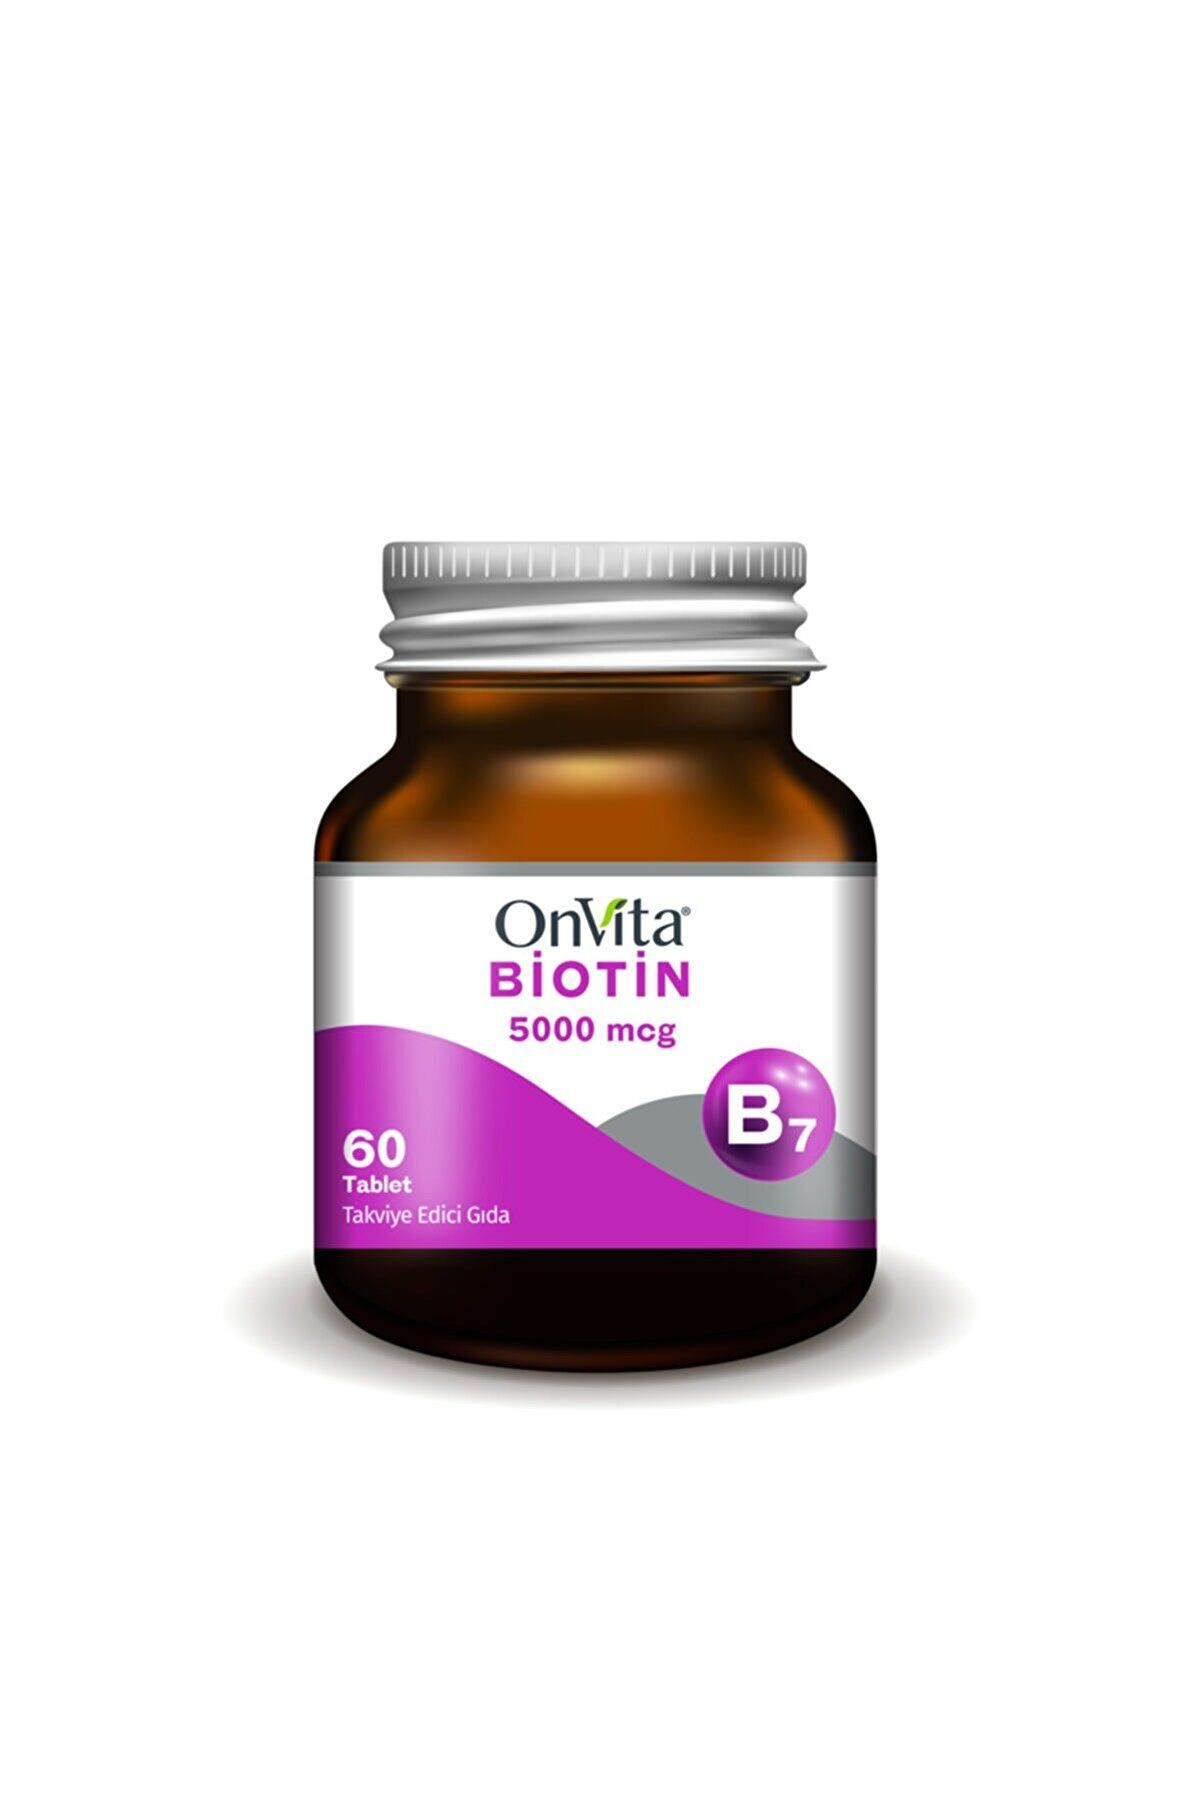 OnVita Biotin 5000 mcg 60 Tablet